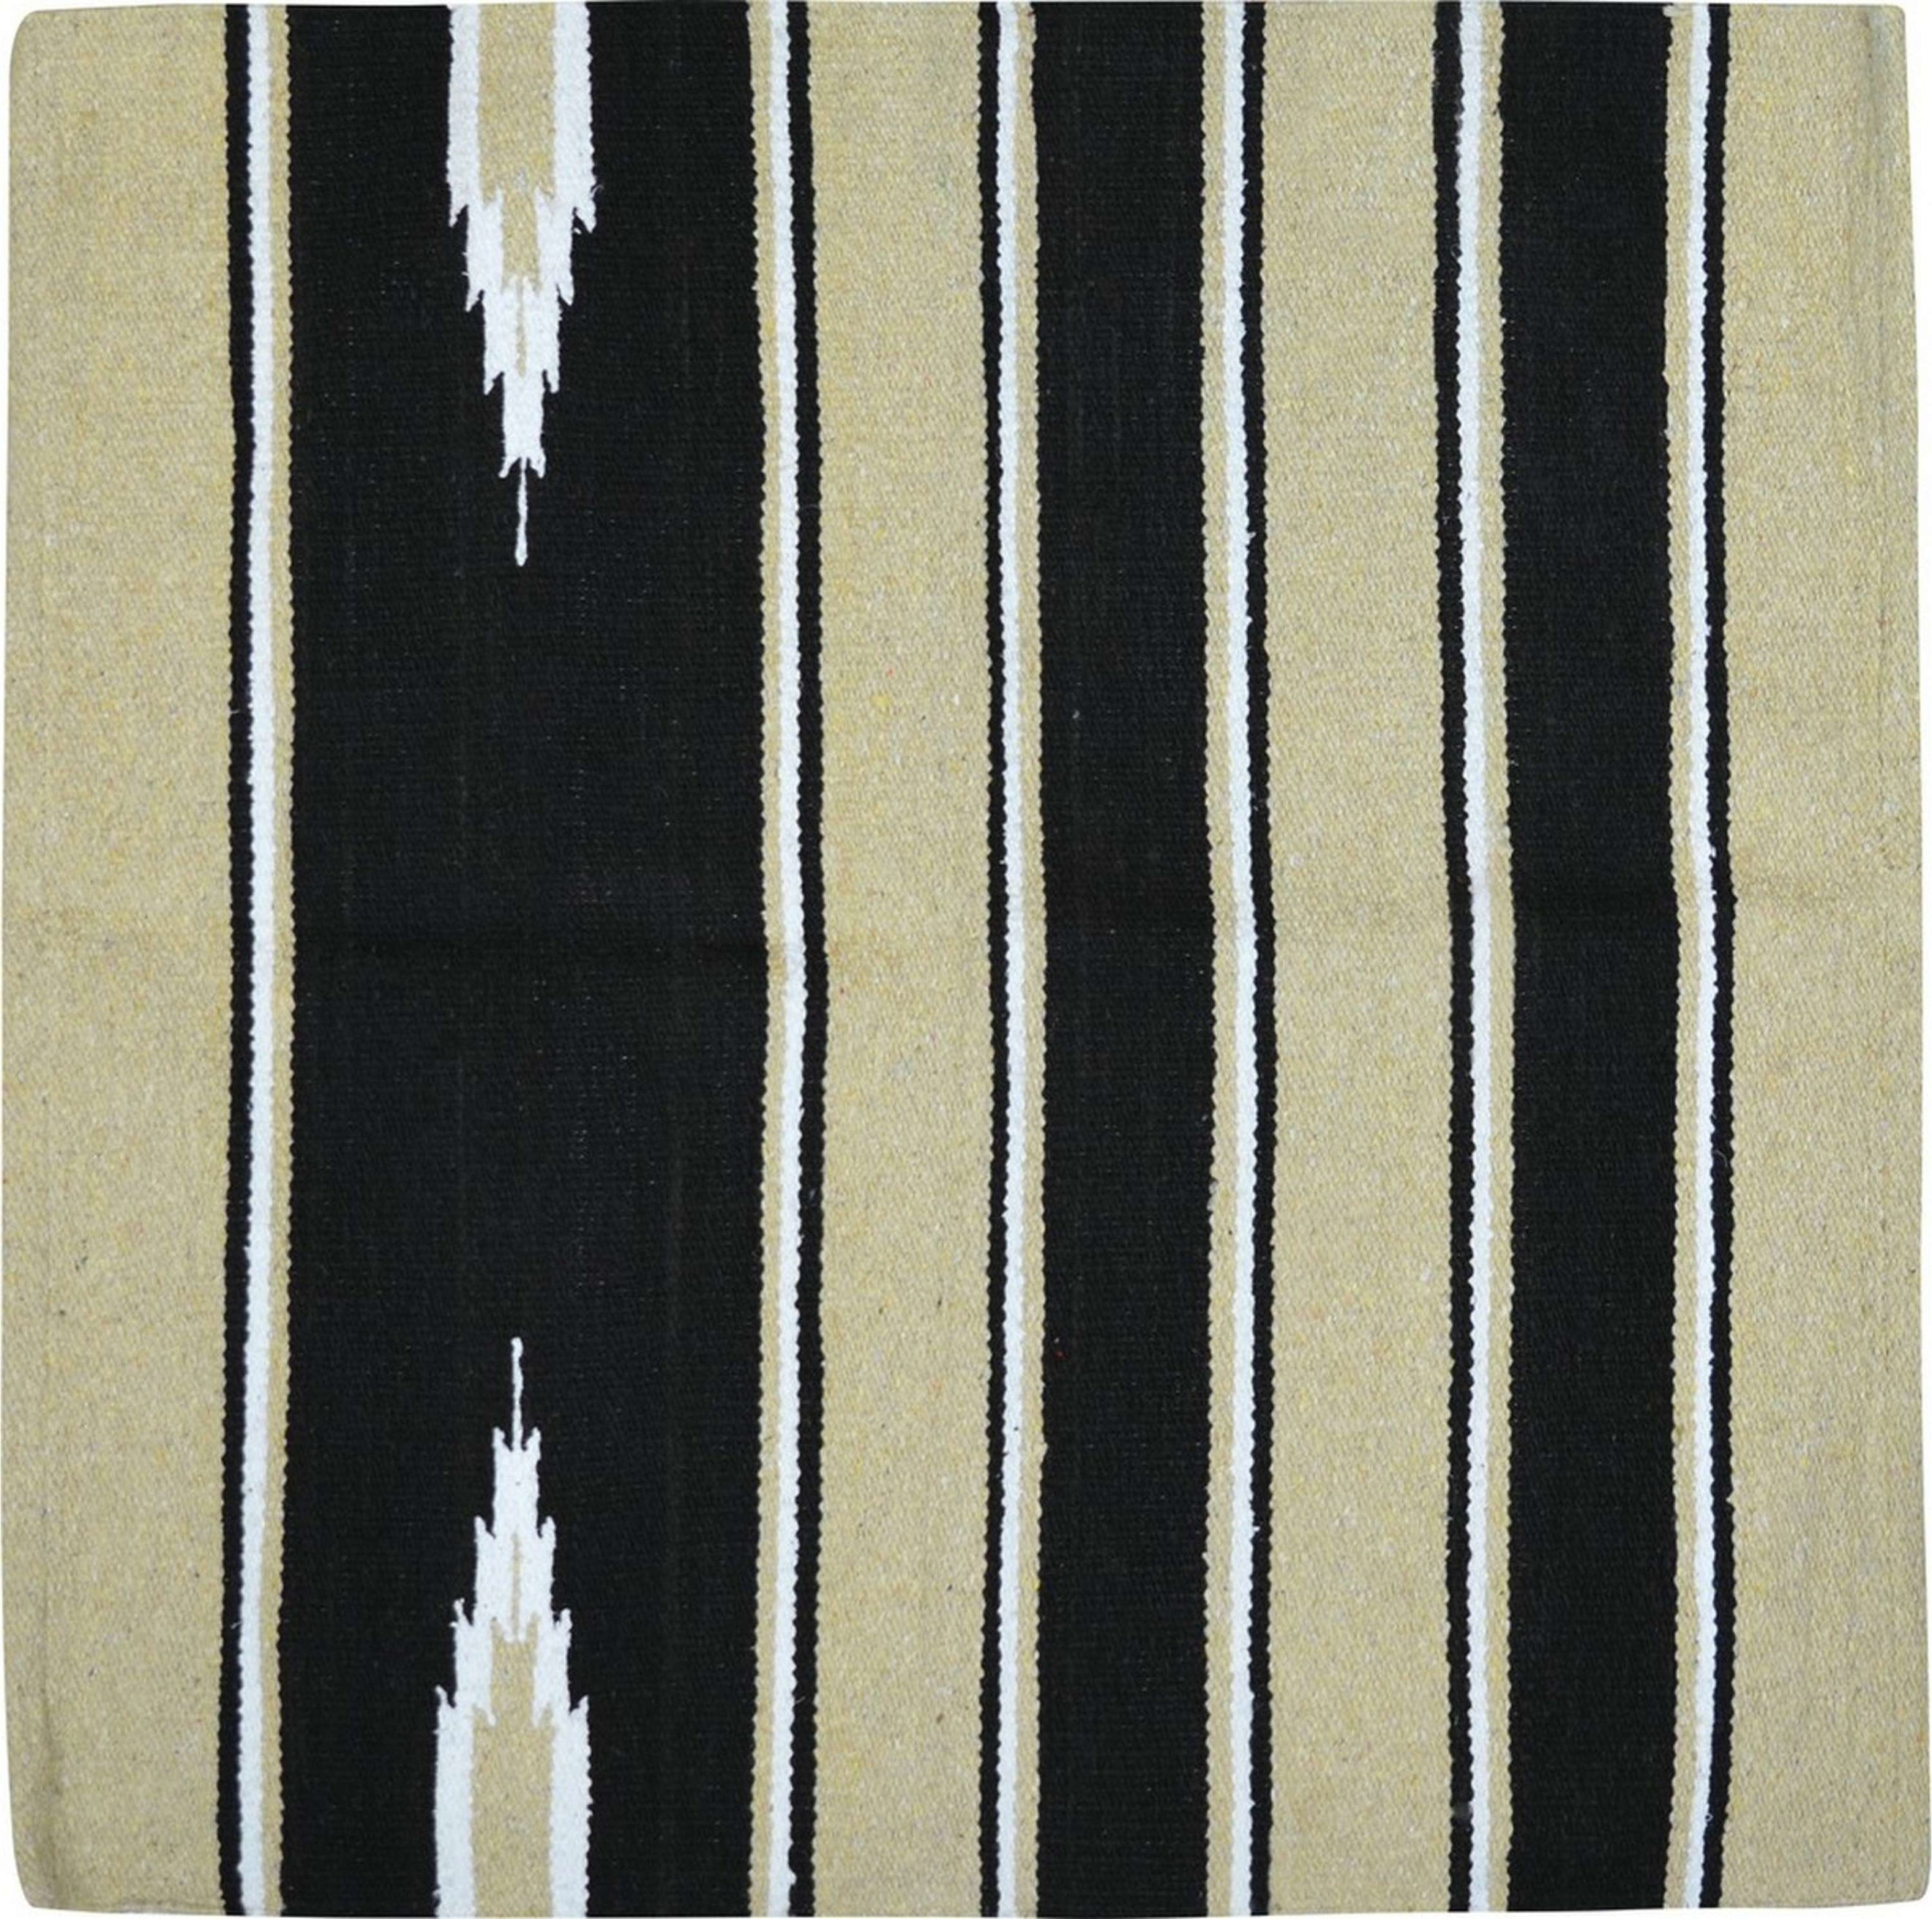 Randol's Navajo Show Blanket Beige/Noir/Blanc